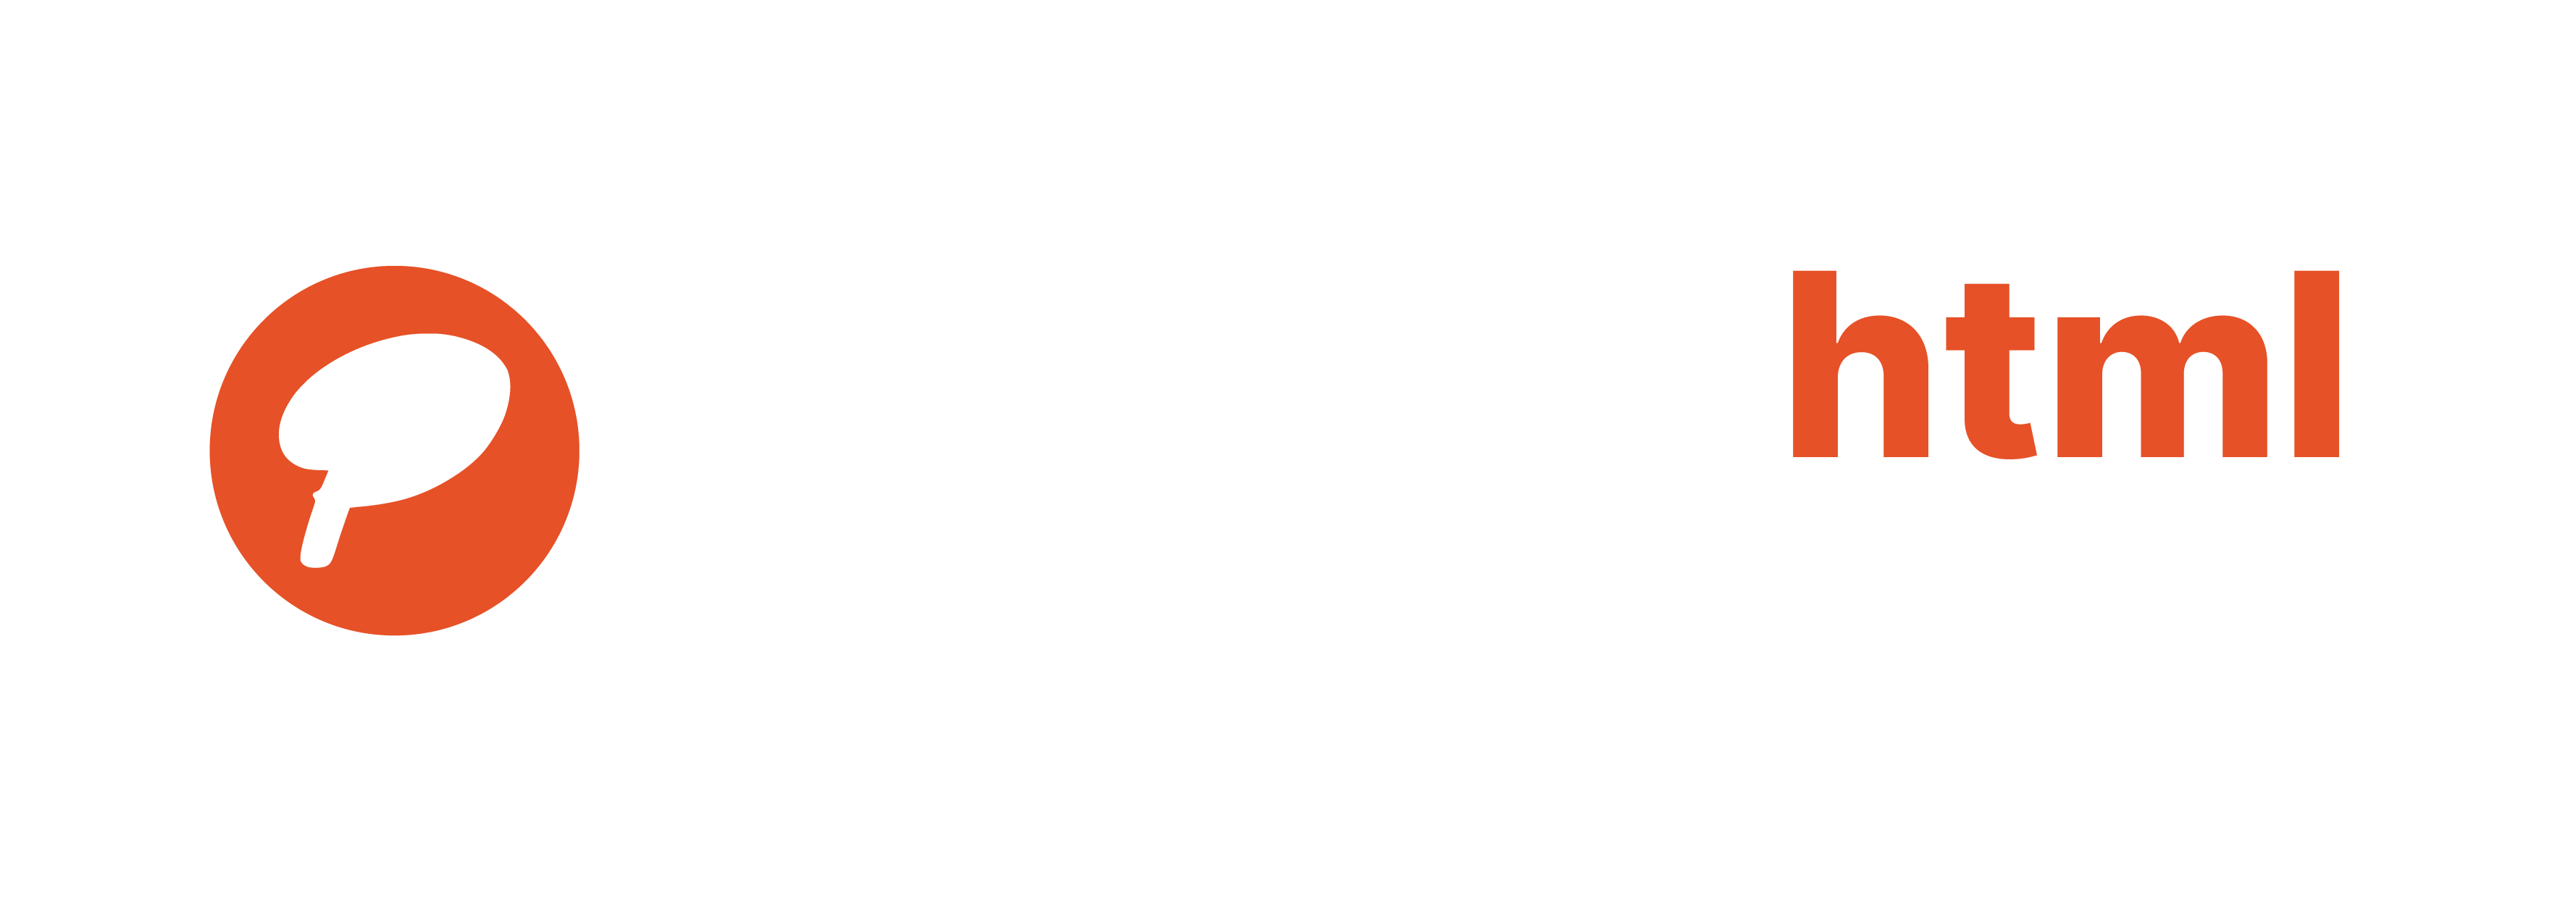 Premiumhtmltemplate Logo 01 1